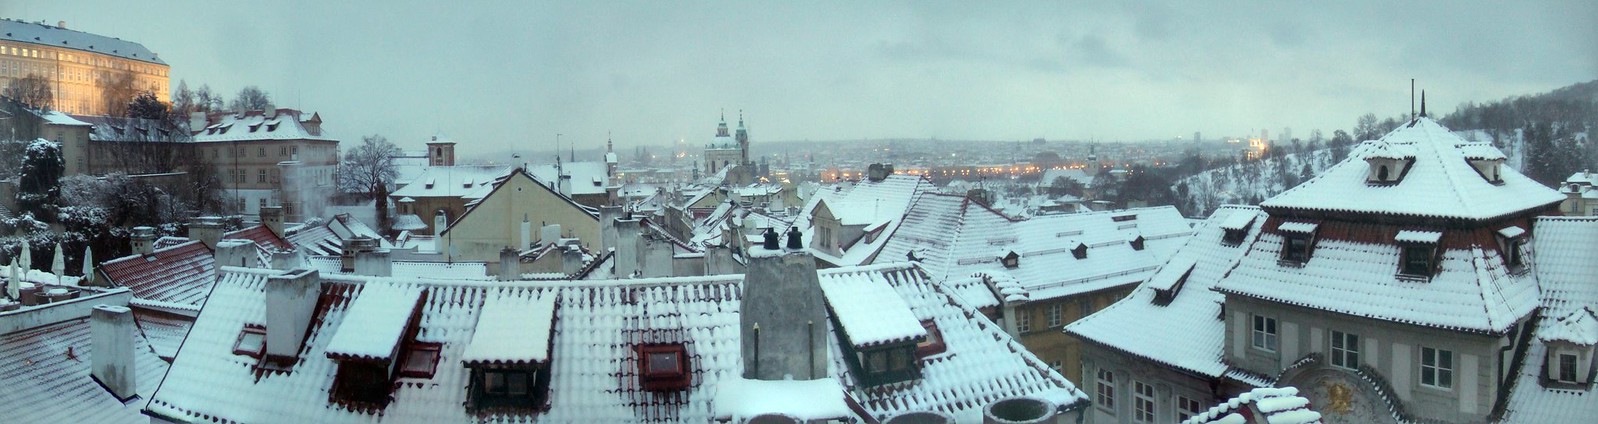 Prague in snow - 1